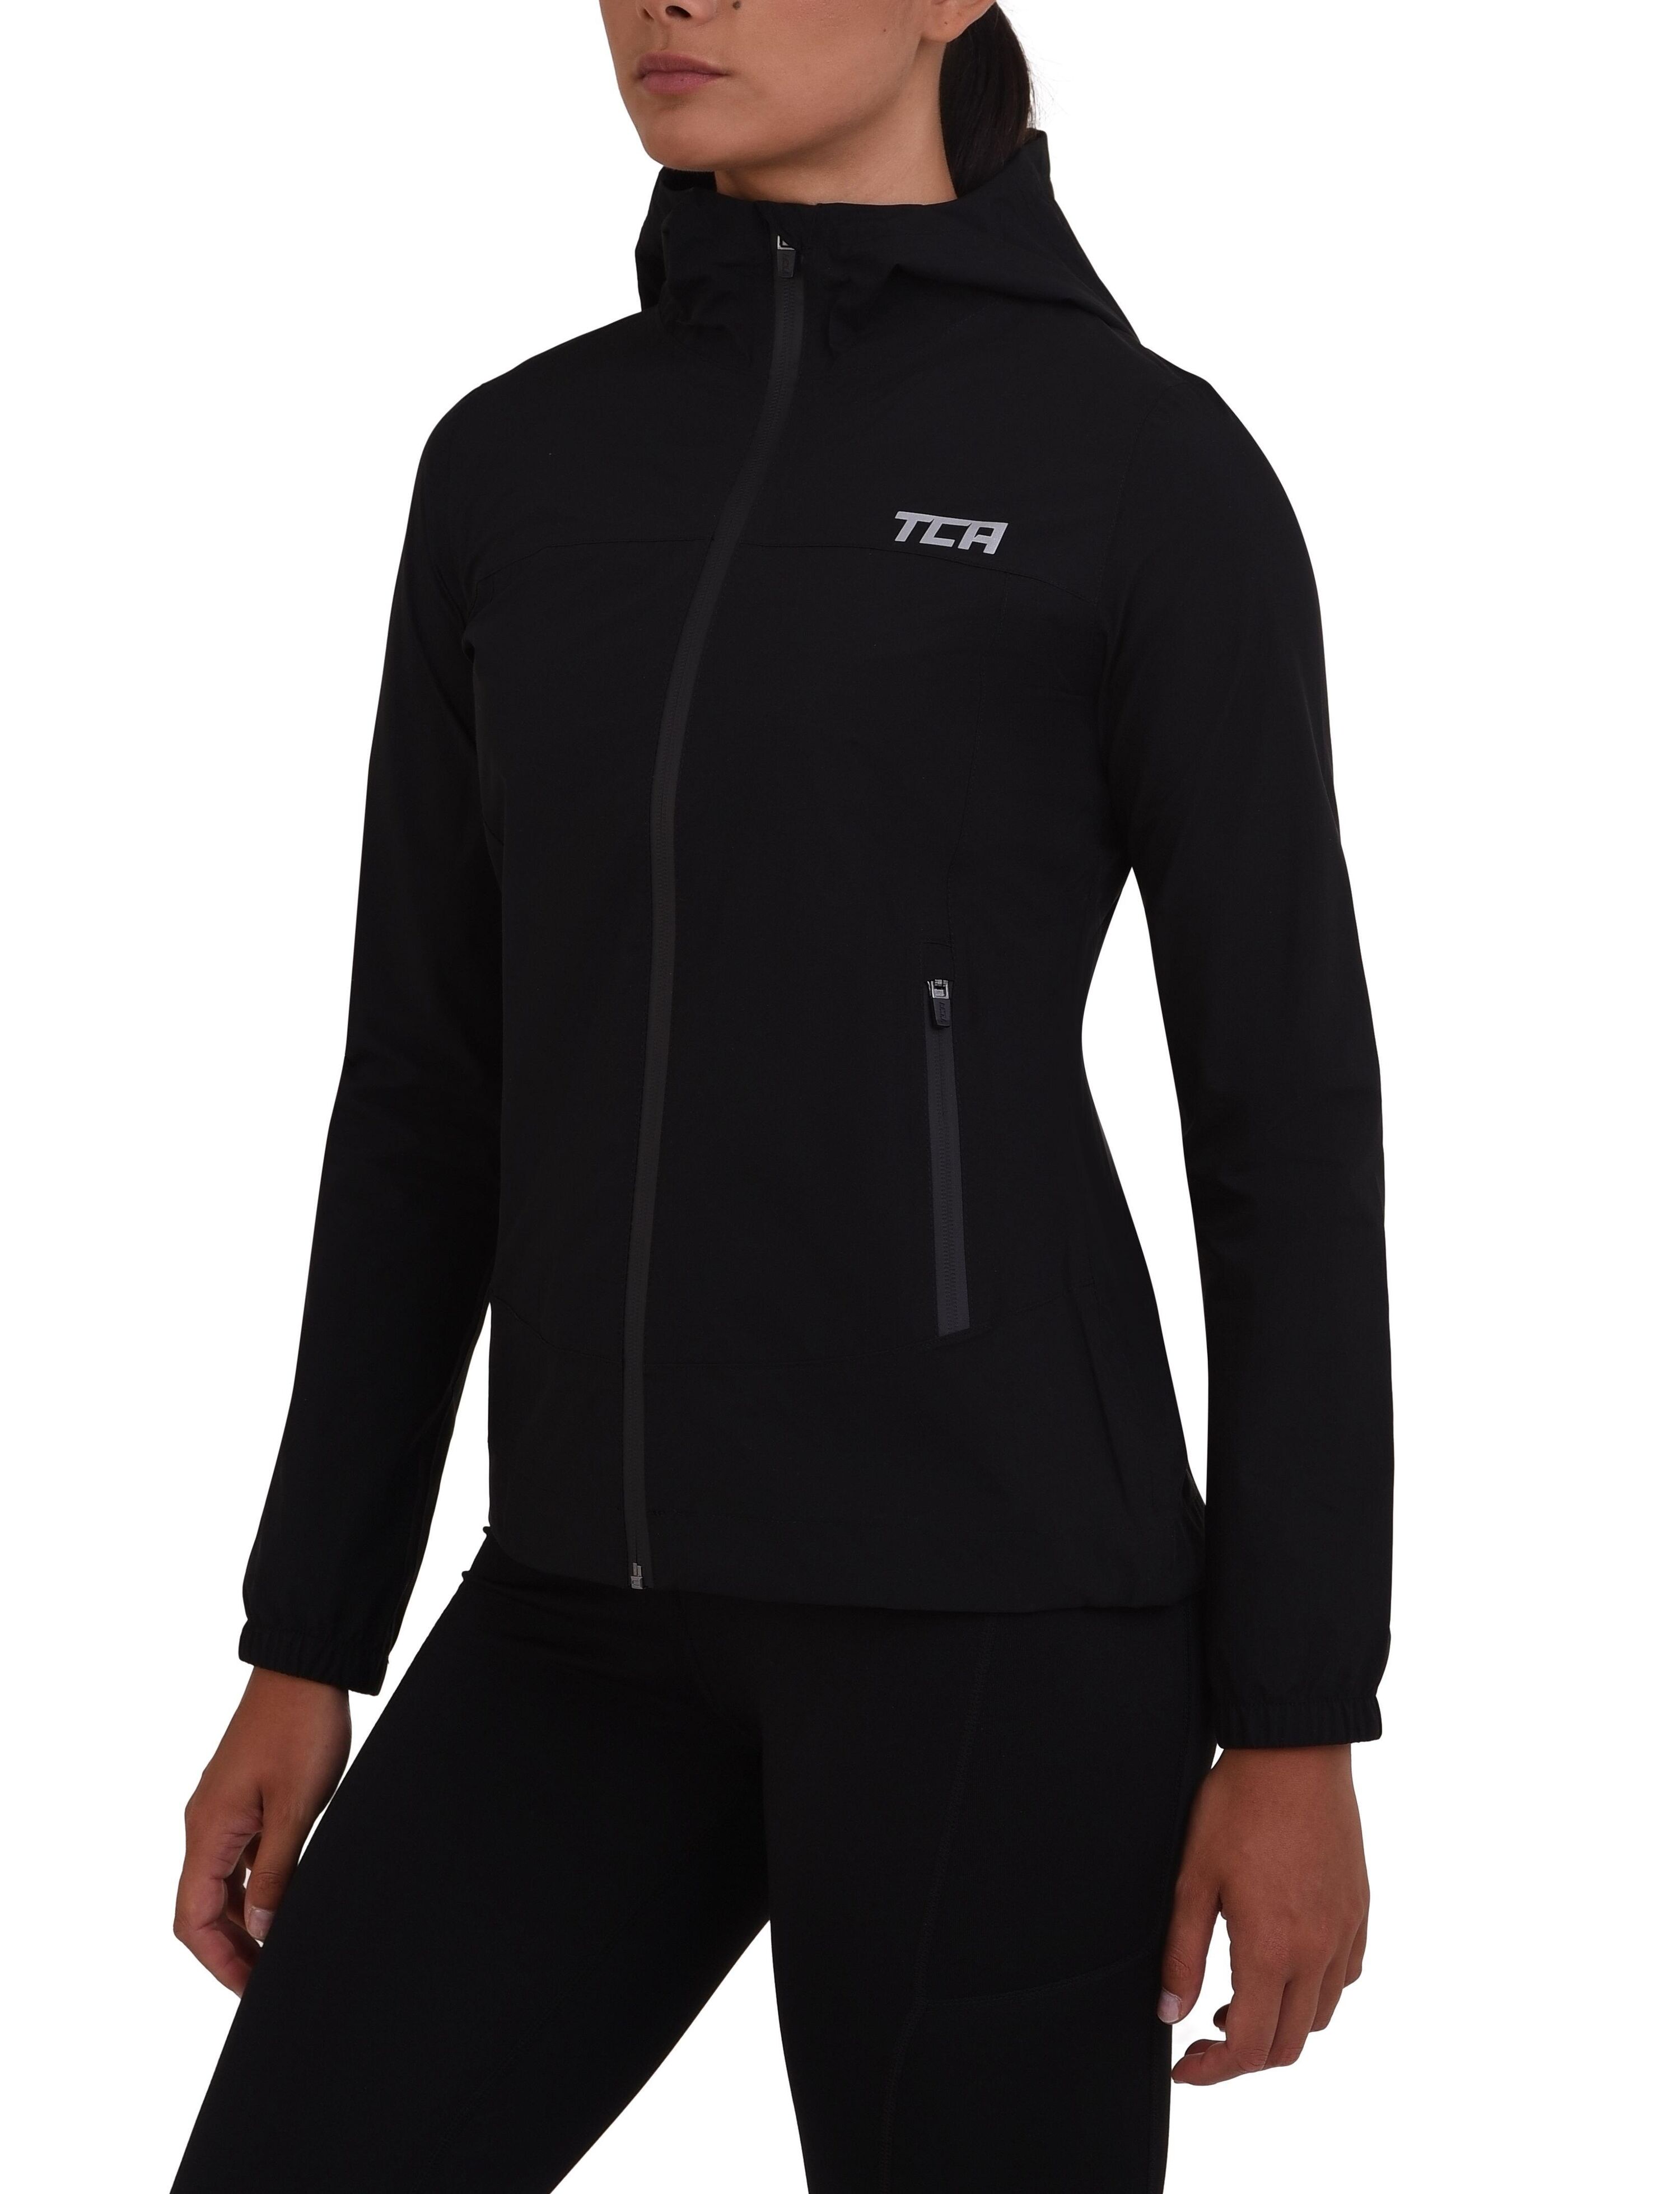 TCA Women's AirLite Rain Jacket with Zip Pockets - Black